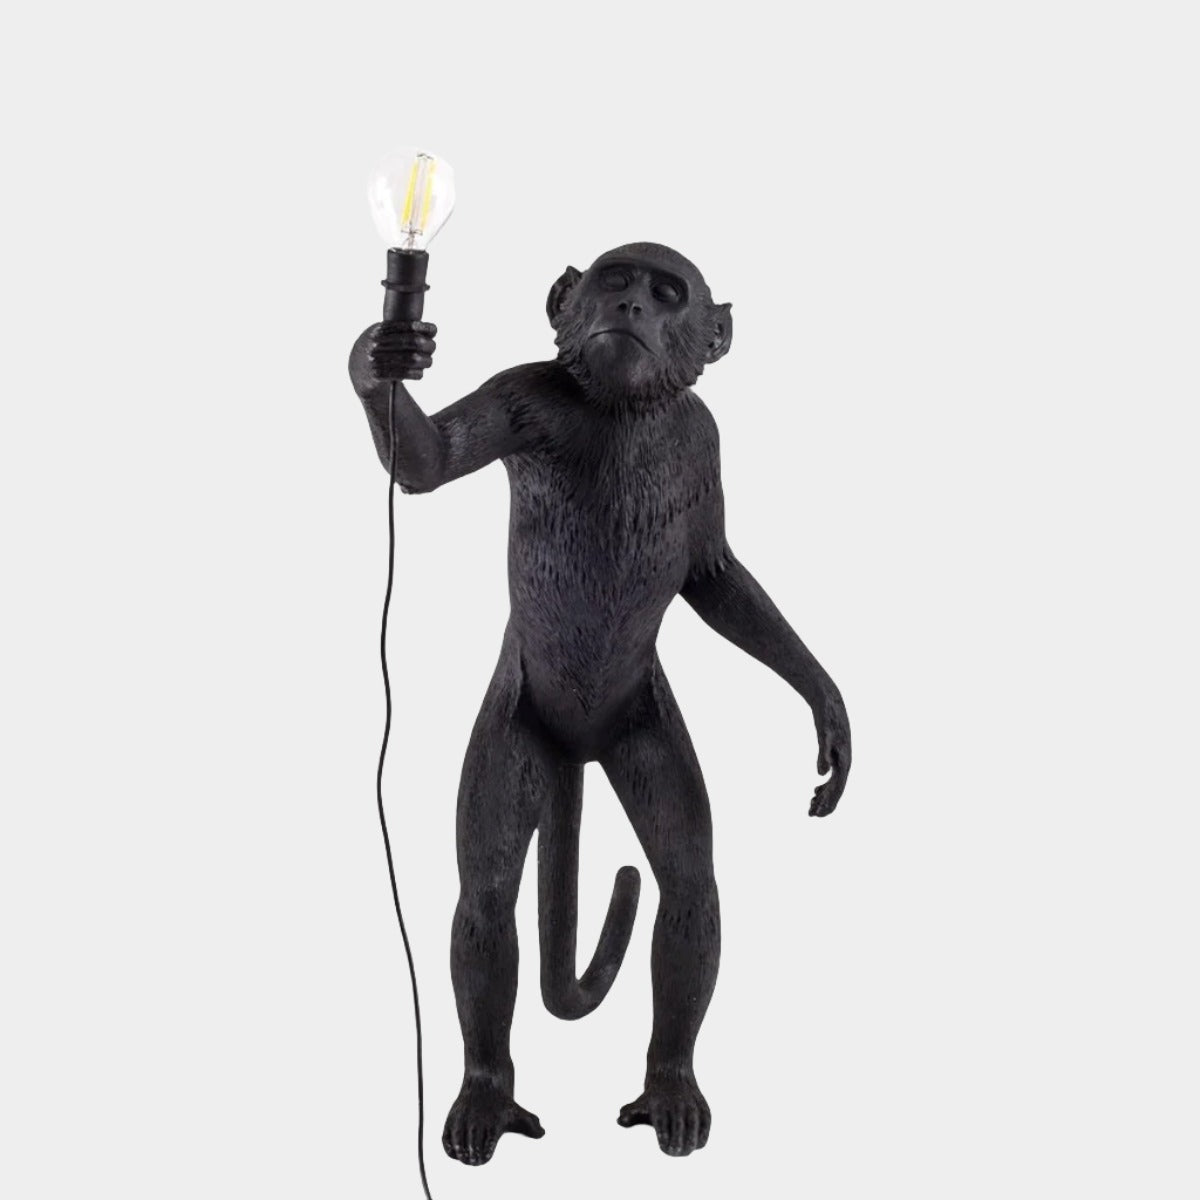 Standing Monkey Light